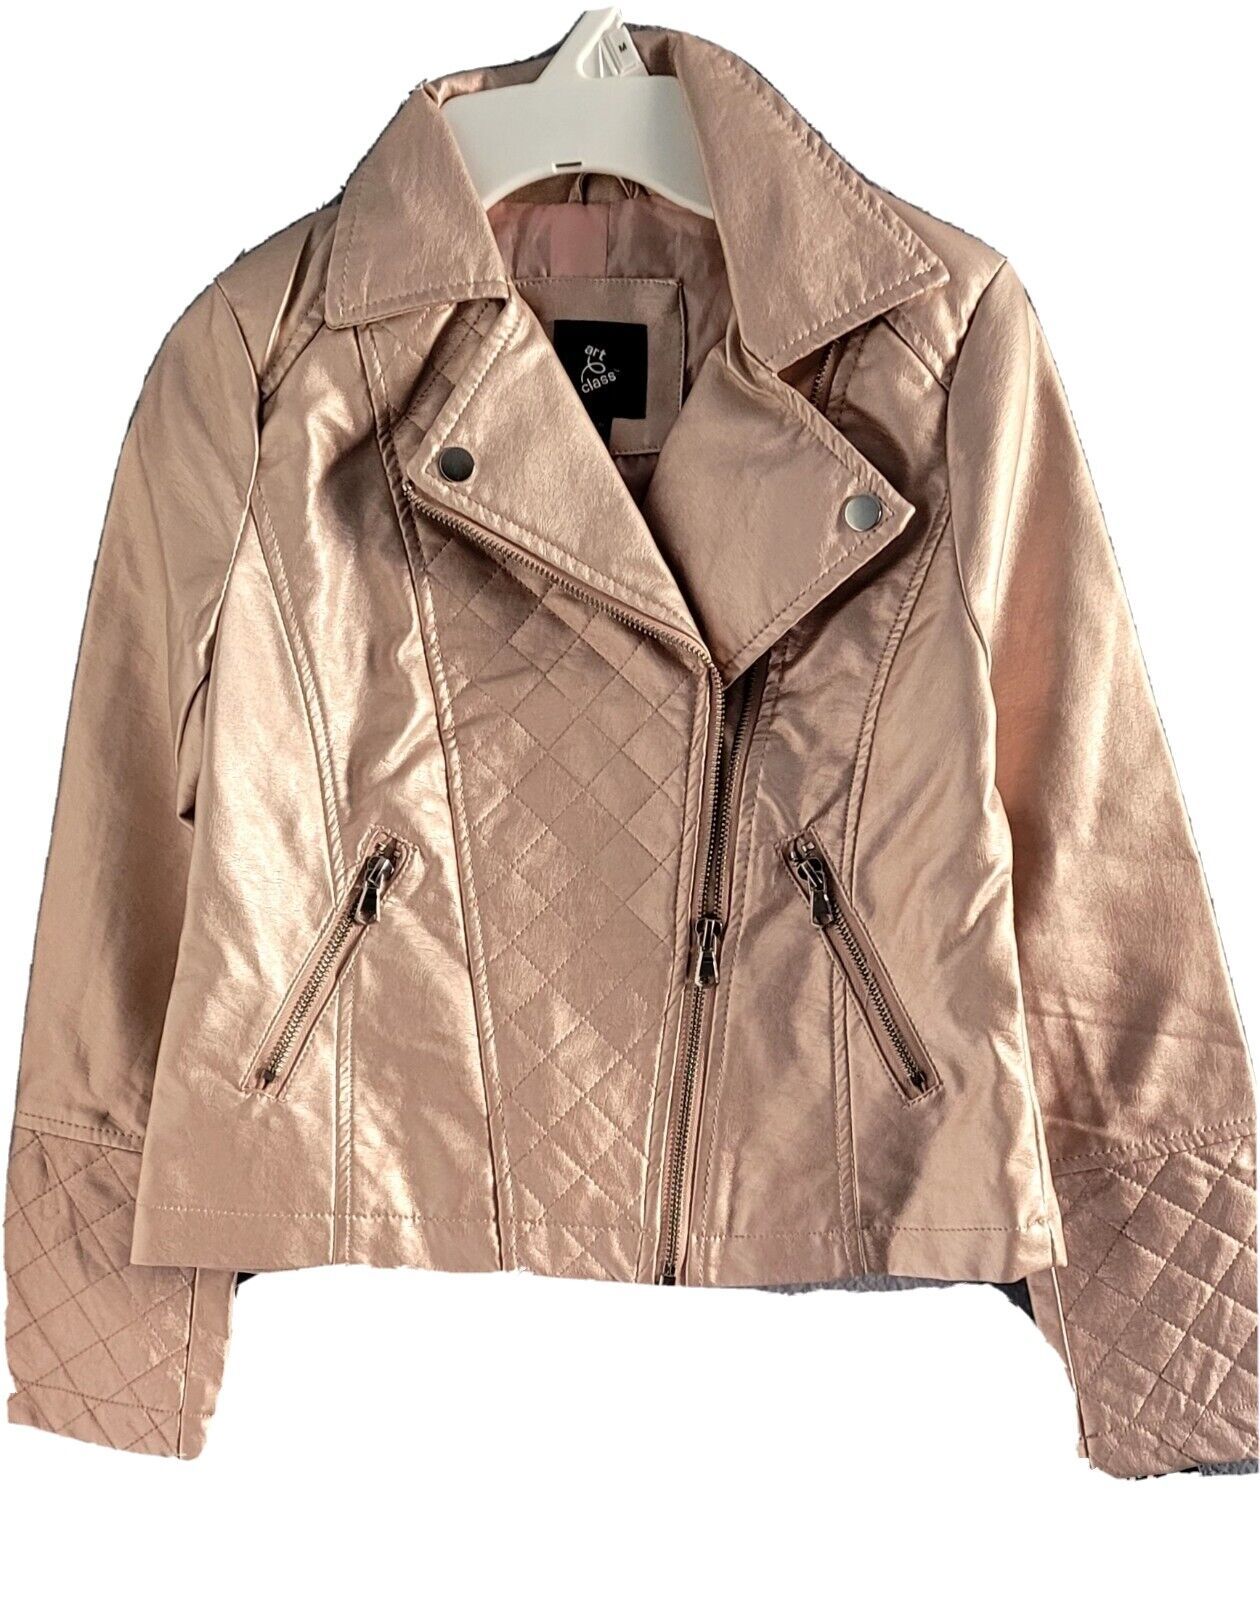 Target Art Class Girls Faux Leather Full Zip Moto Jacket Size M 7/8 Pink New - $14.22